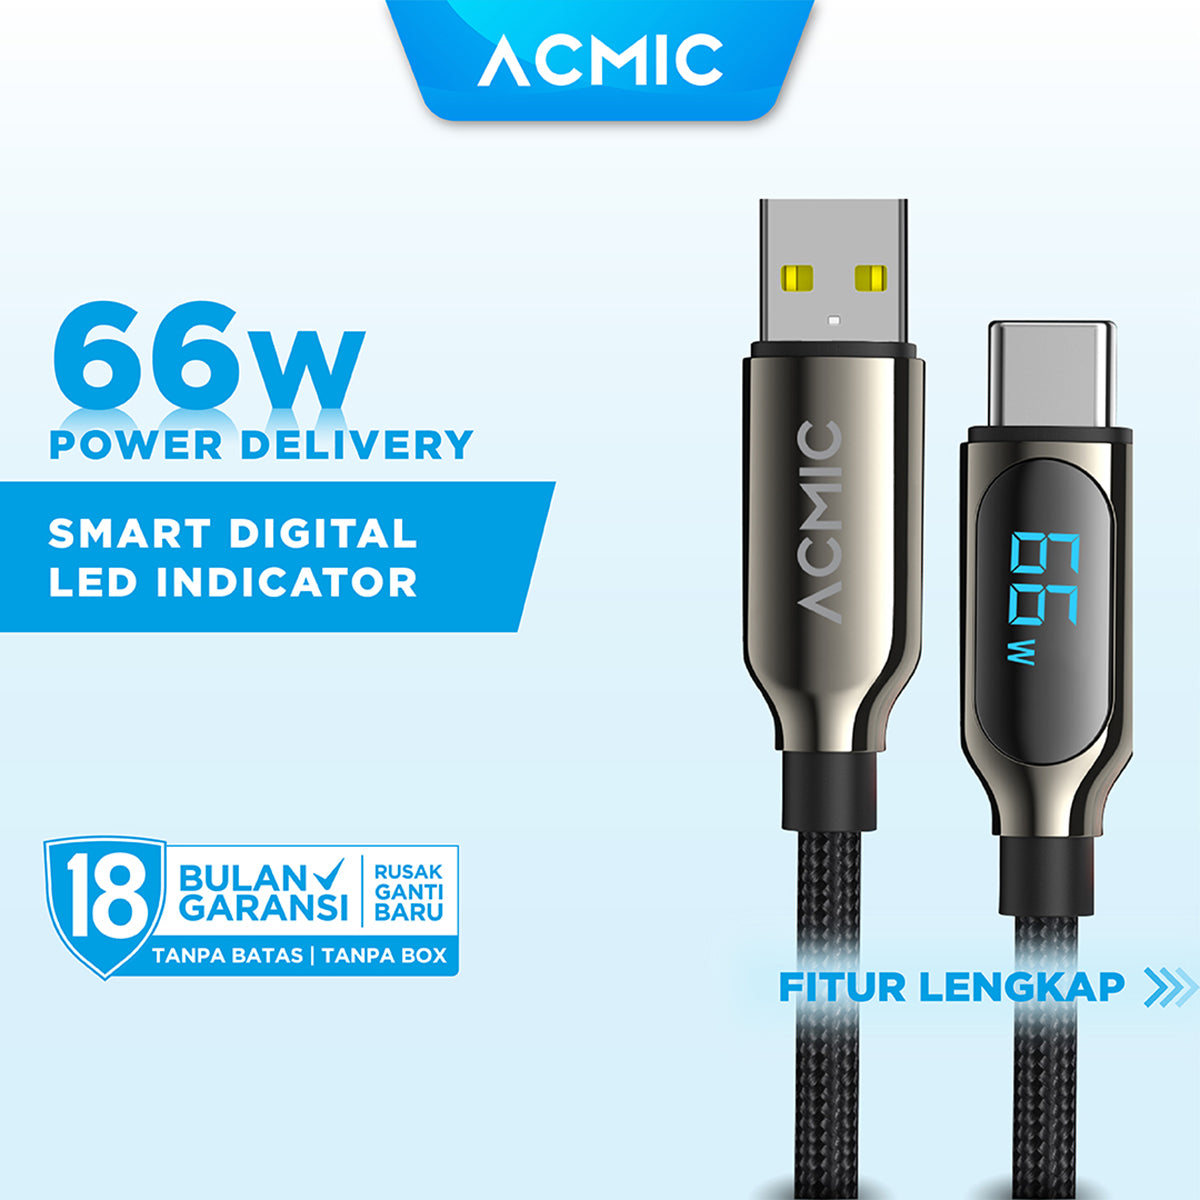 ACMIC DIGILINE Kabel Data USB-A to USB-C Fast Charging 66W LED DISPLAY